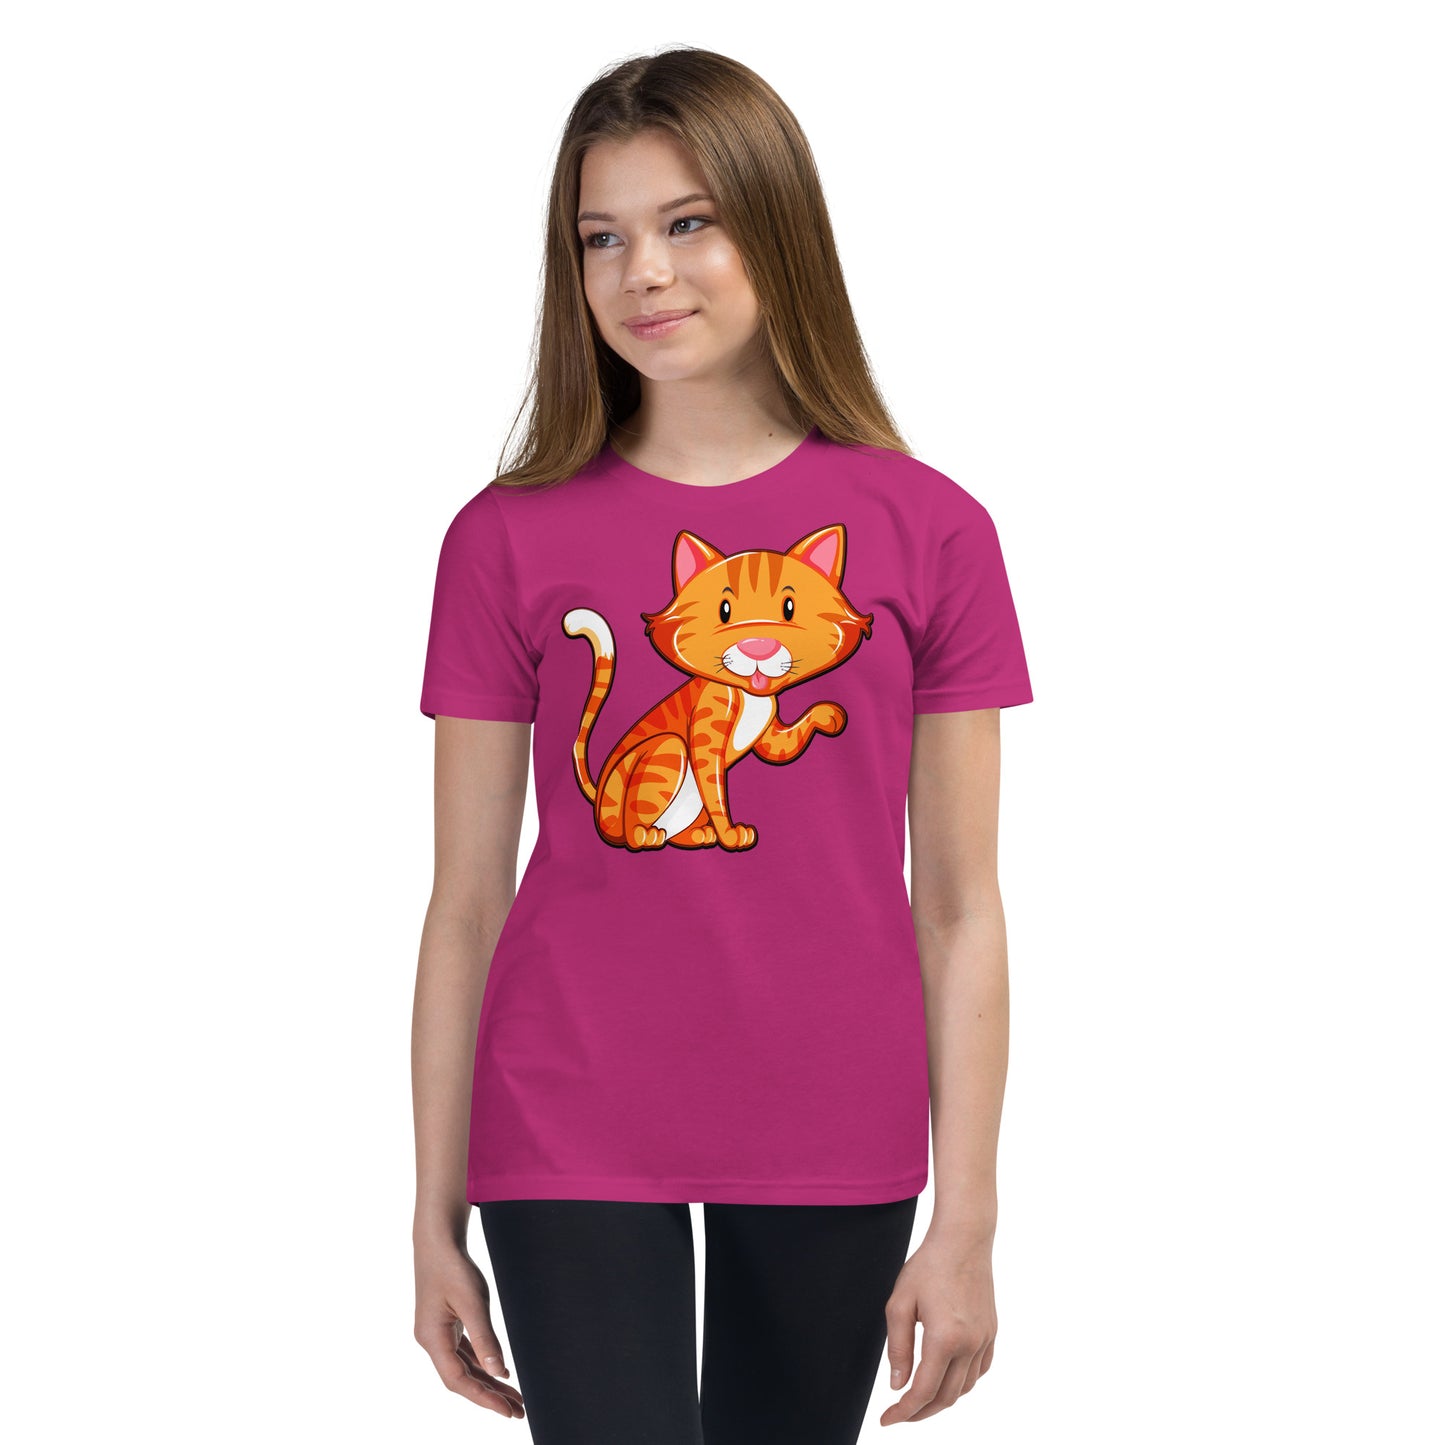 Cute Cat T-shirt, No. 0173